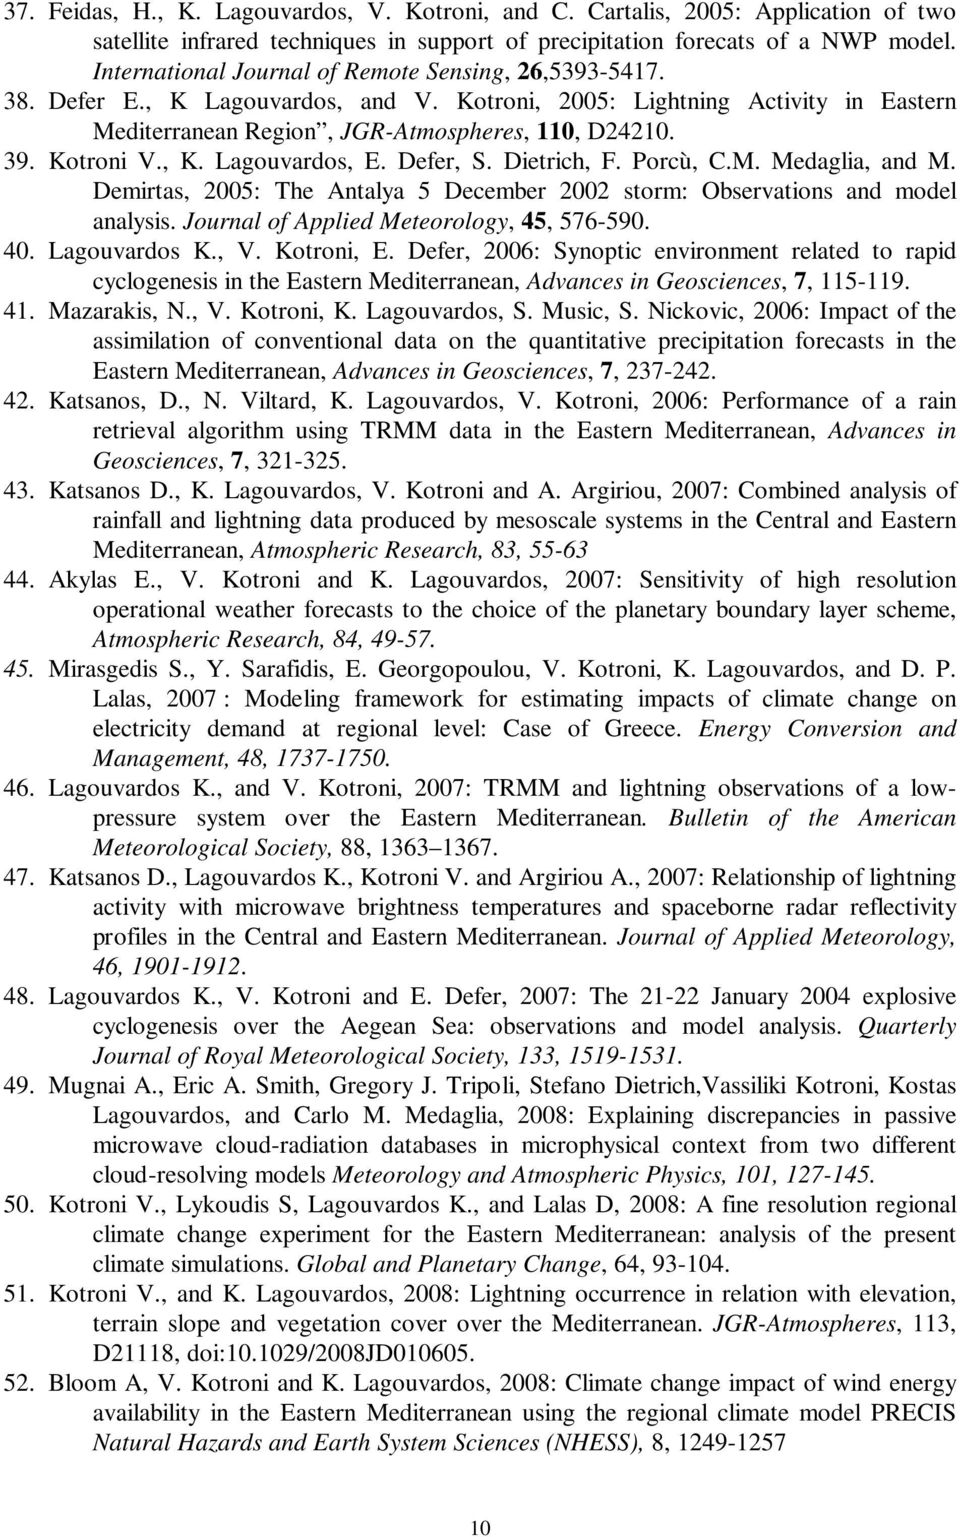 Kotroni V., K. Lagouvardos, E. Defer, S. Dietrich, F. Porcù, C.M. Medaglia, and M. Demirtas, 2005: The Antalya 5 December 2002 storm: Observations and model analysis.